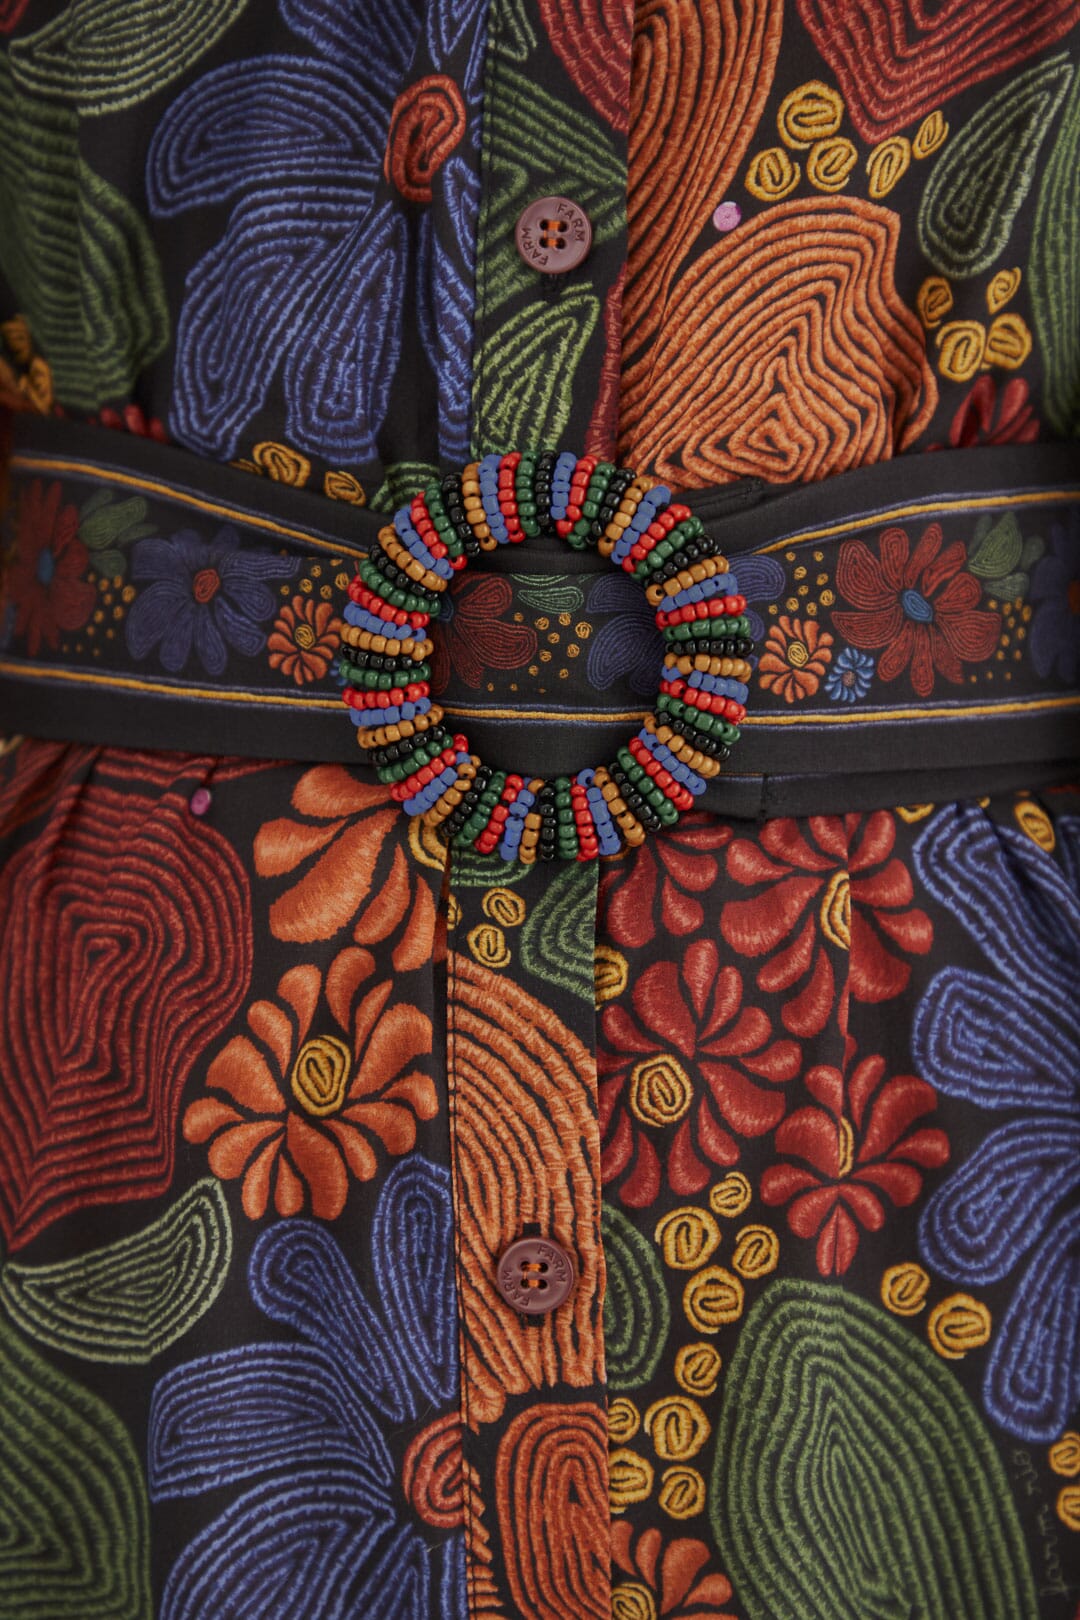 Black Stitched Flowers Organic Cotton Bodysuit – FARM Rio